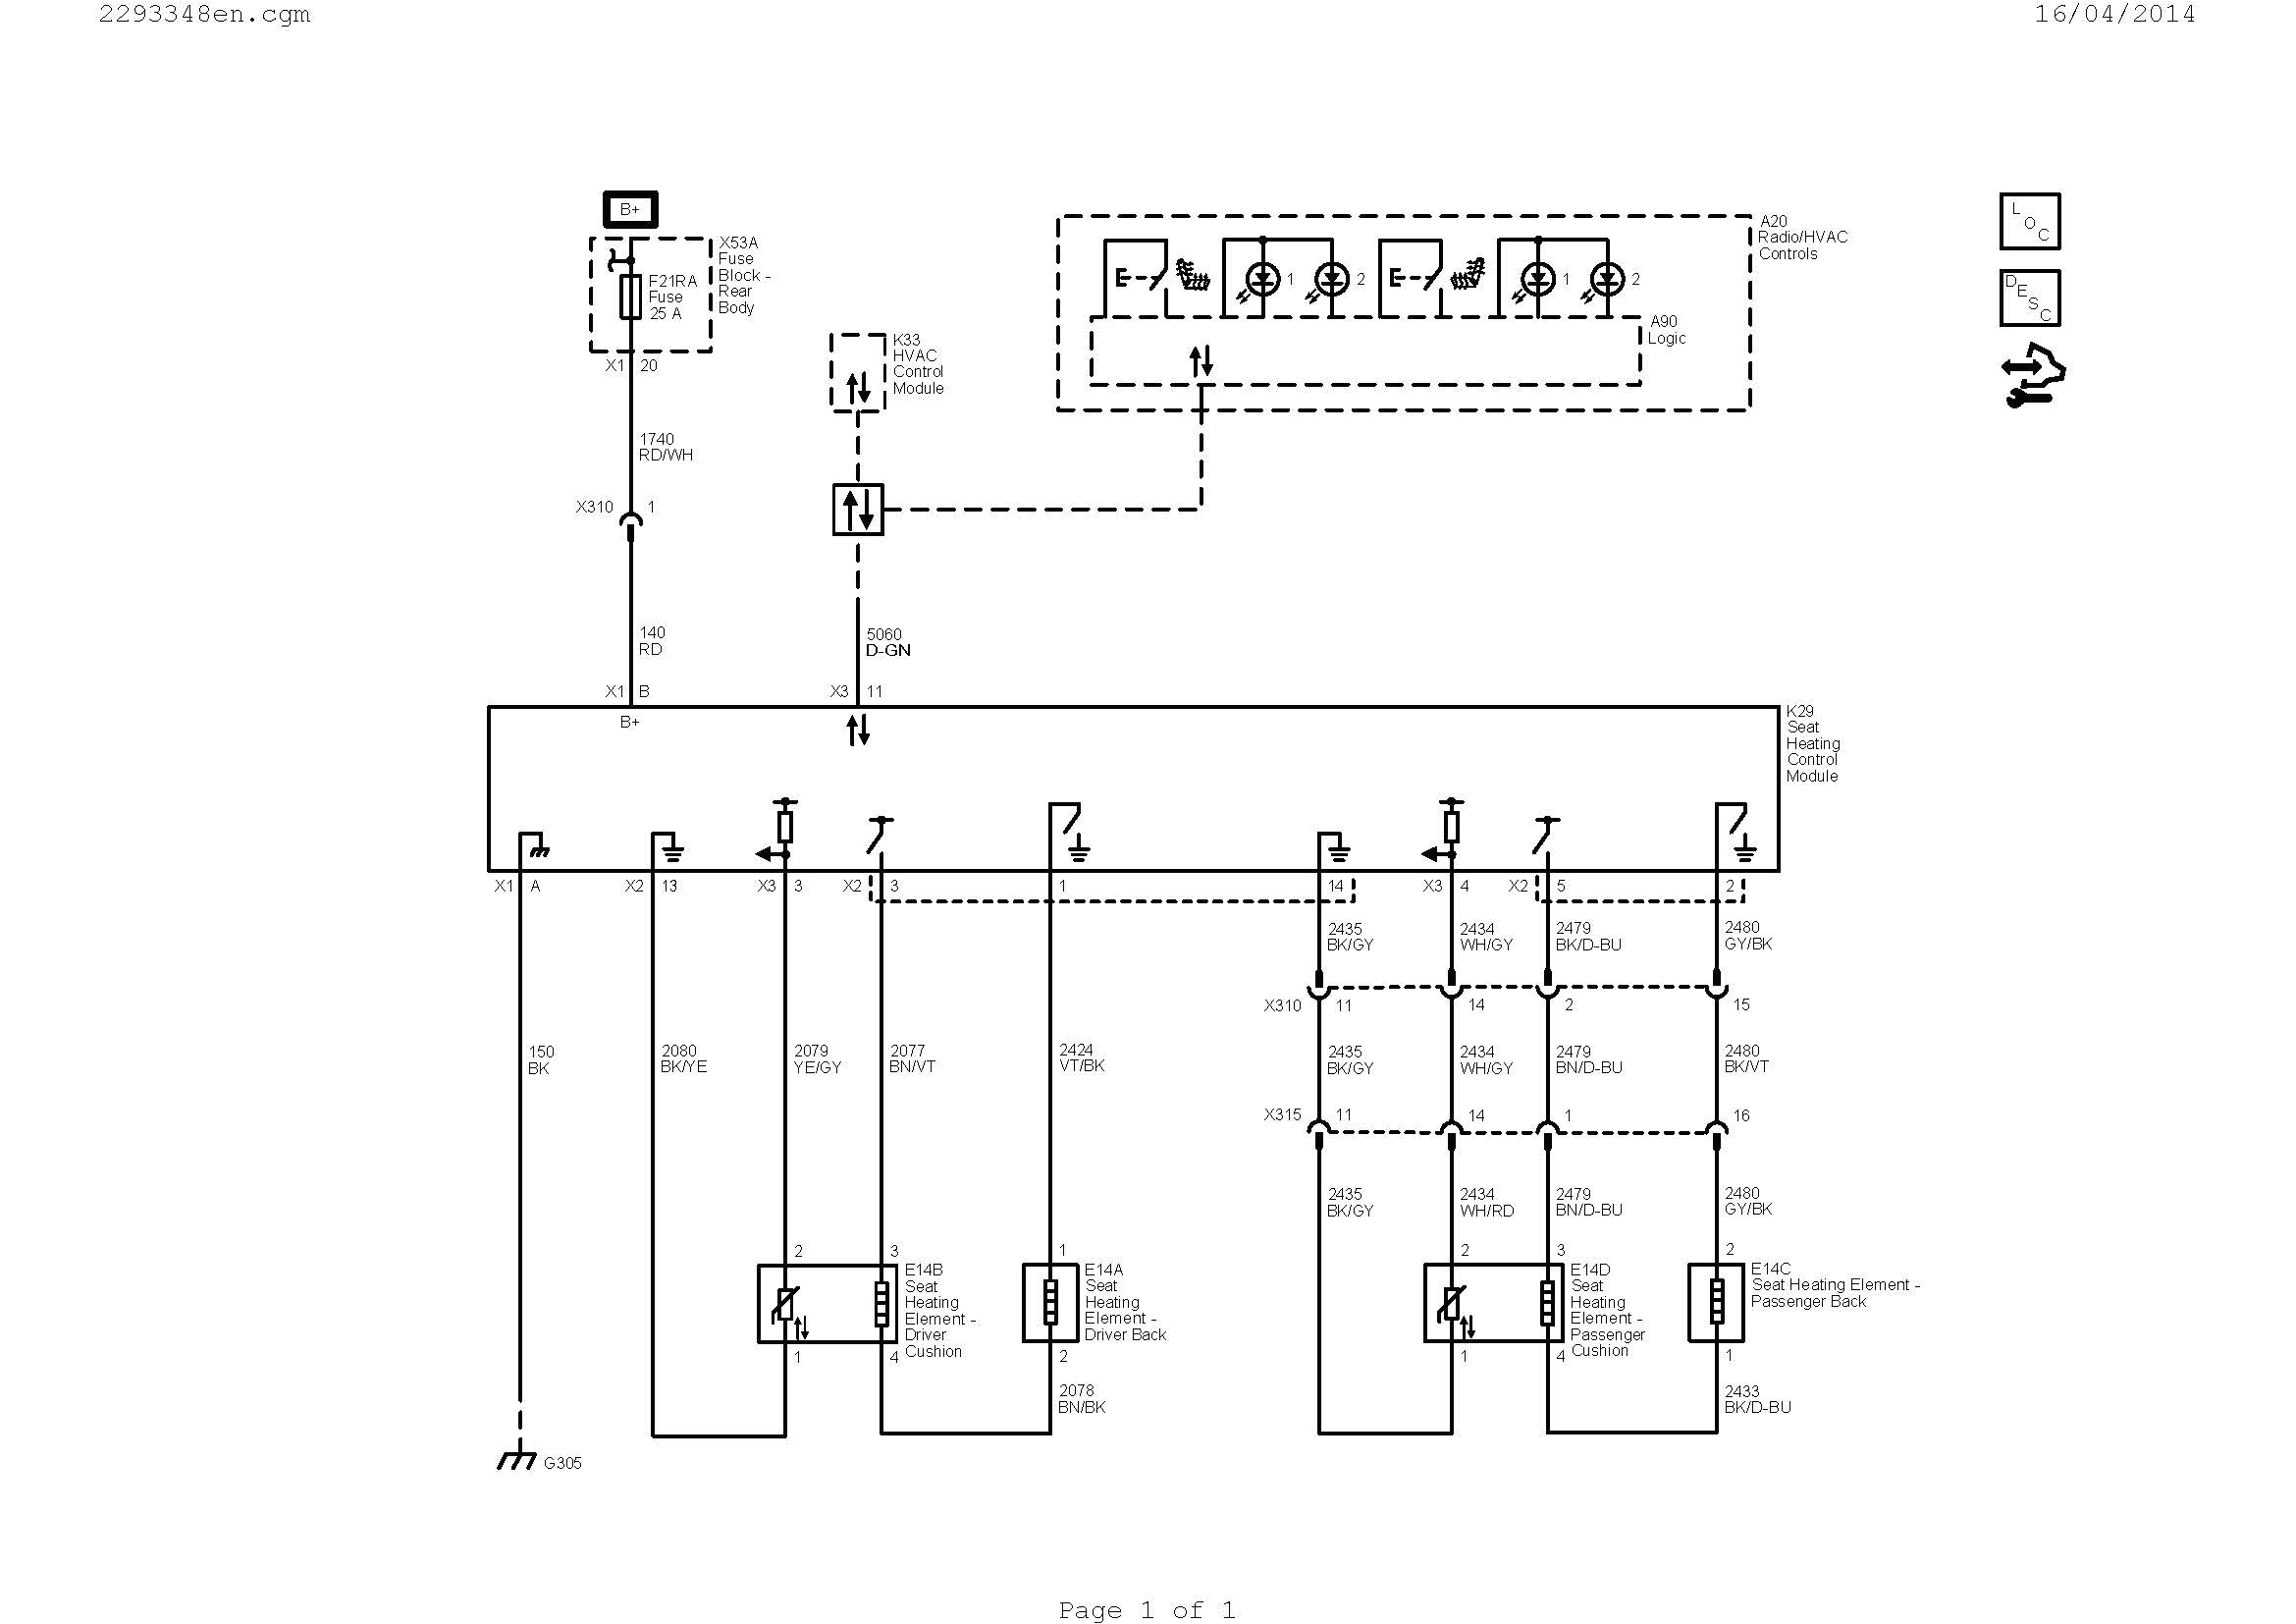 wiring diagram for trailer kes schema diagram database electric trailer kes wiring diagram wiring diagram electric